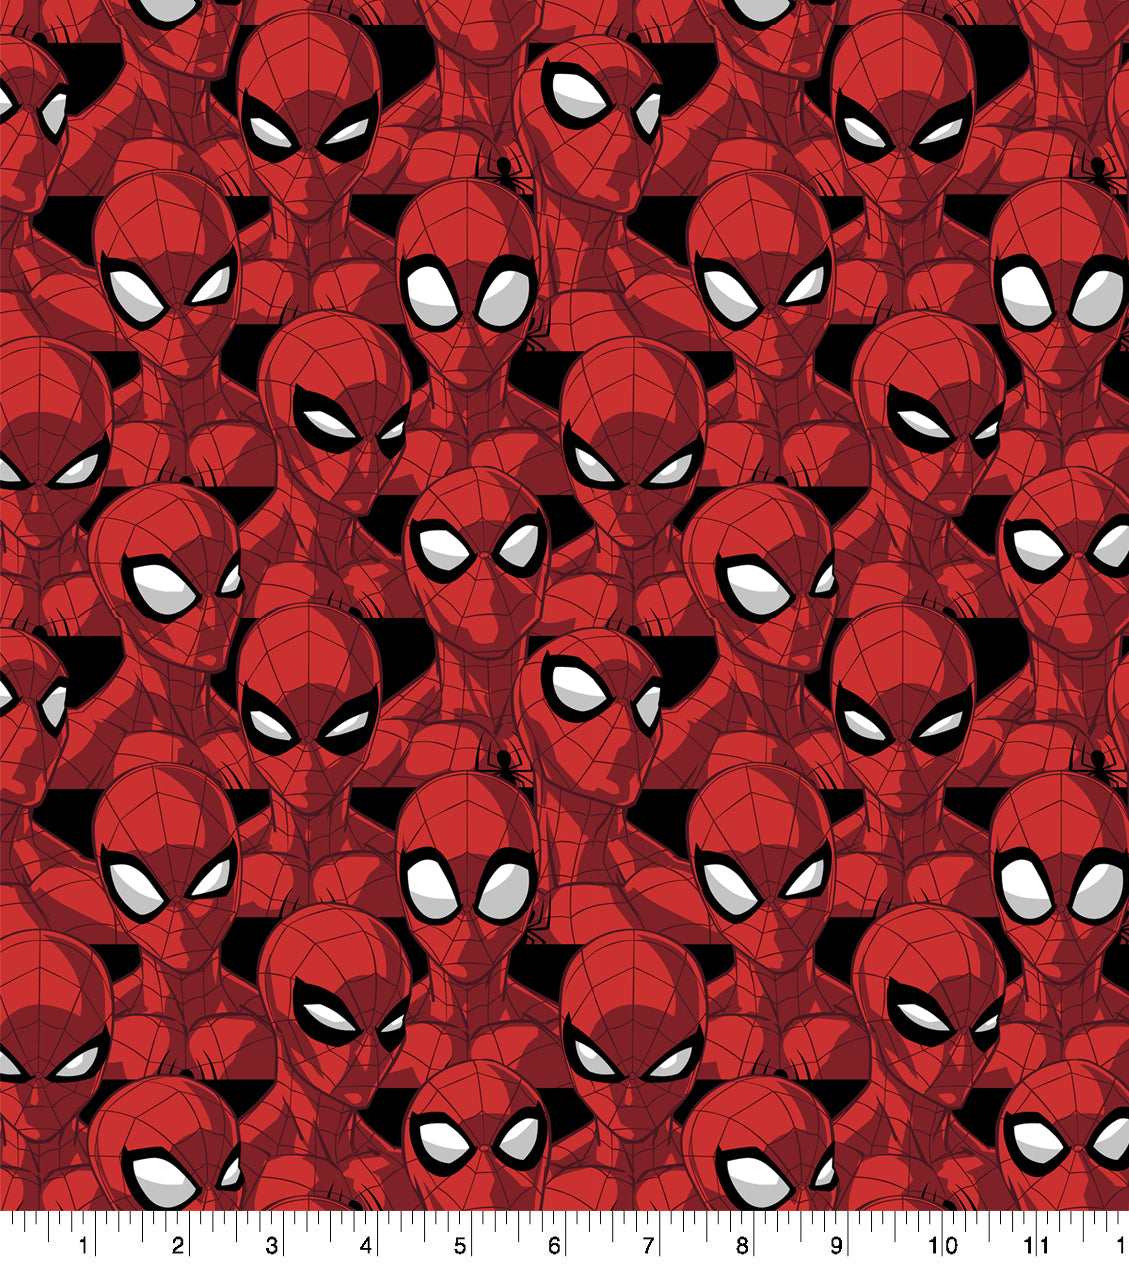 Marvel's Spider-Man Spider Sense Character Fabric